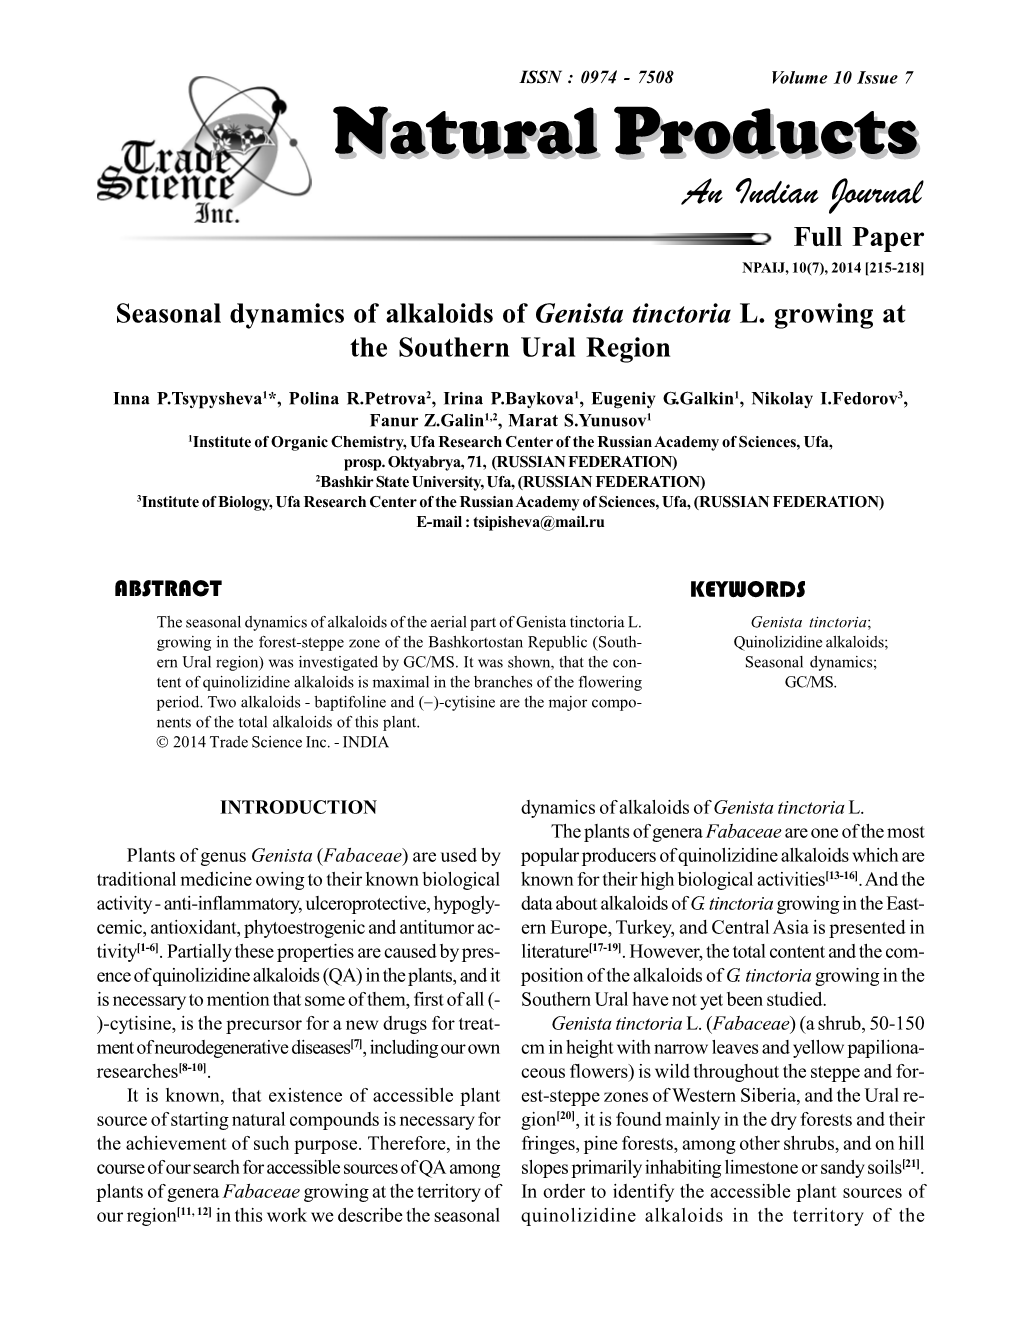 Seasonal Dynamics of Alkaloids of Genista Tinctoria L. Growing at the Southern Ural Region